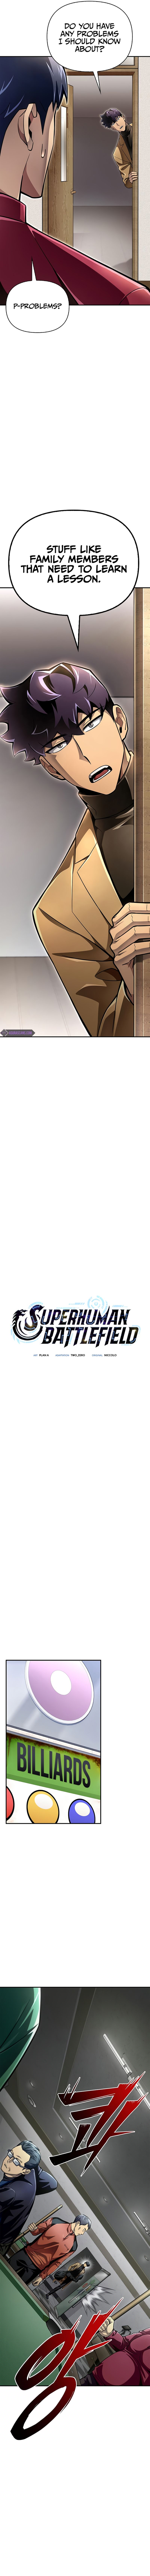 Superhuman Battlefield Chapter 51 page 4